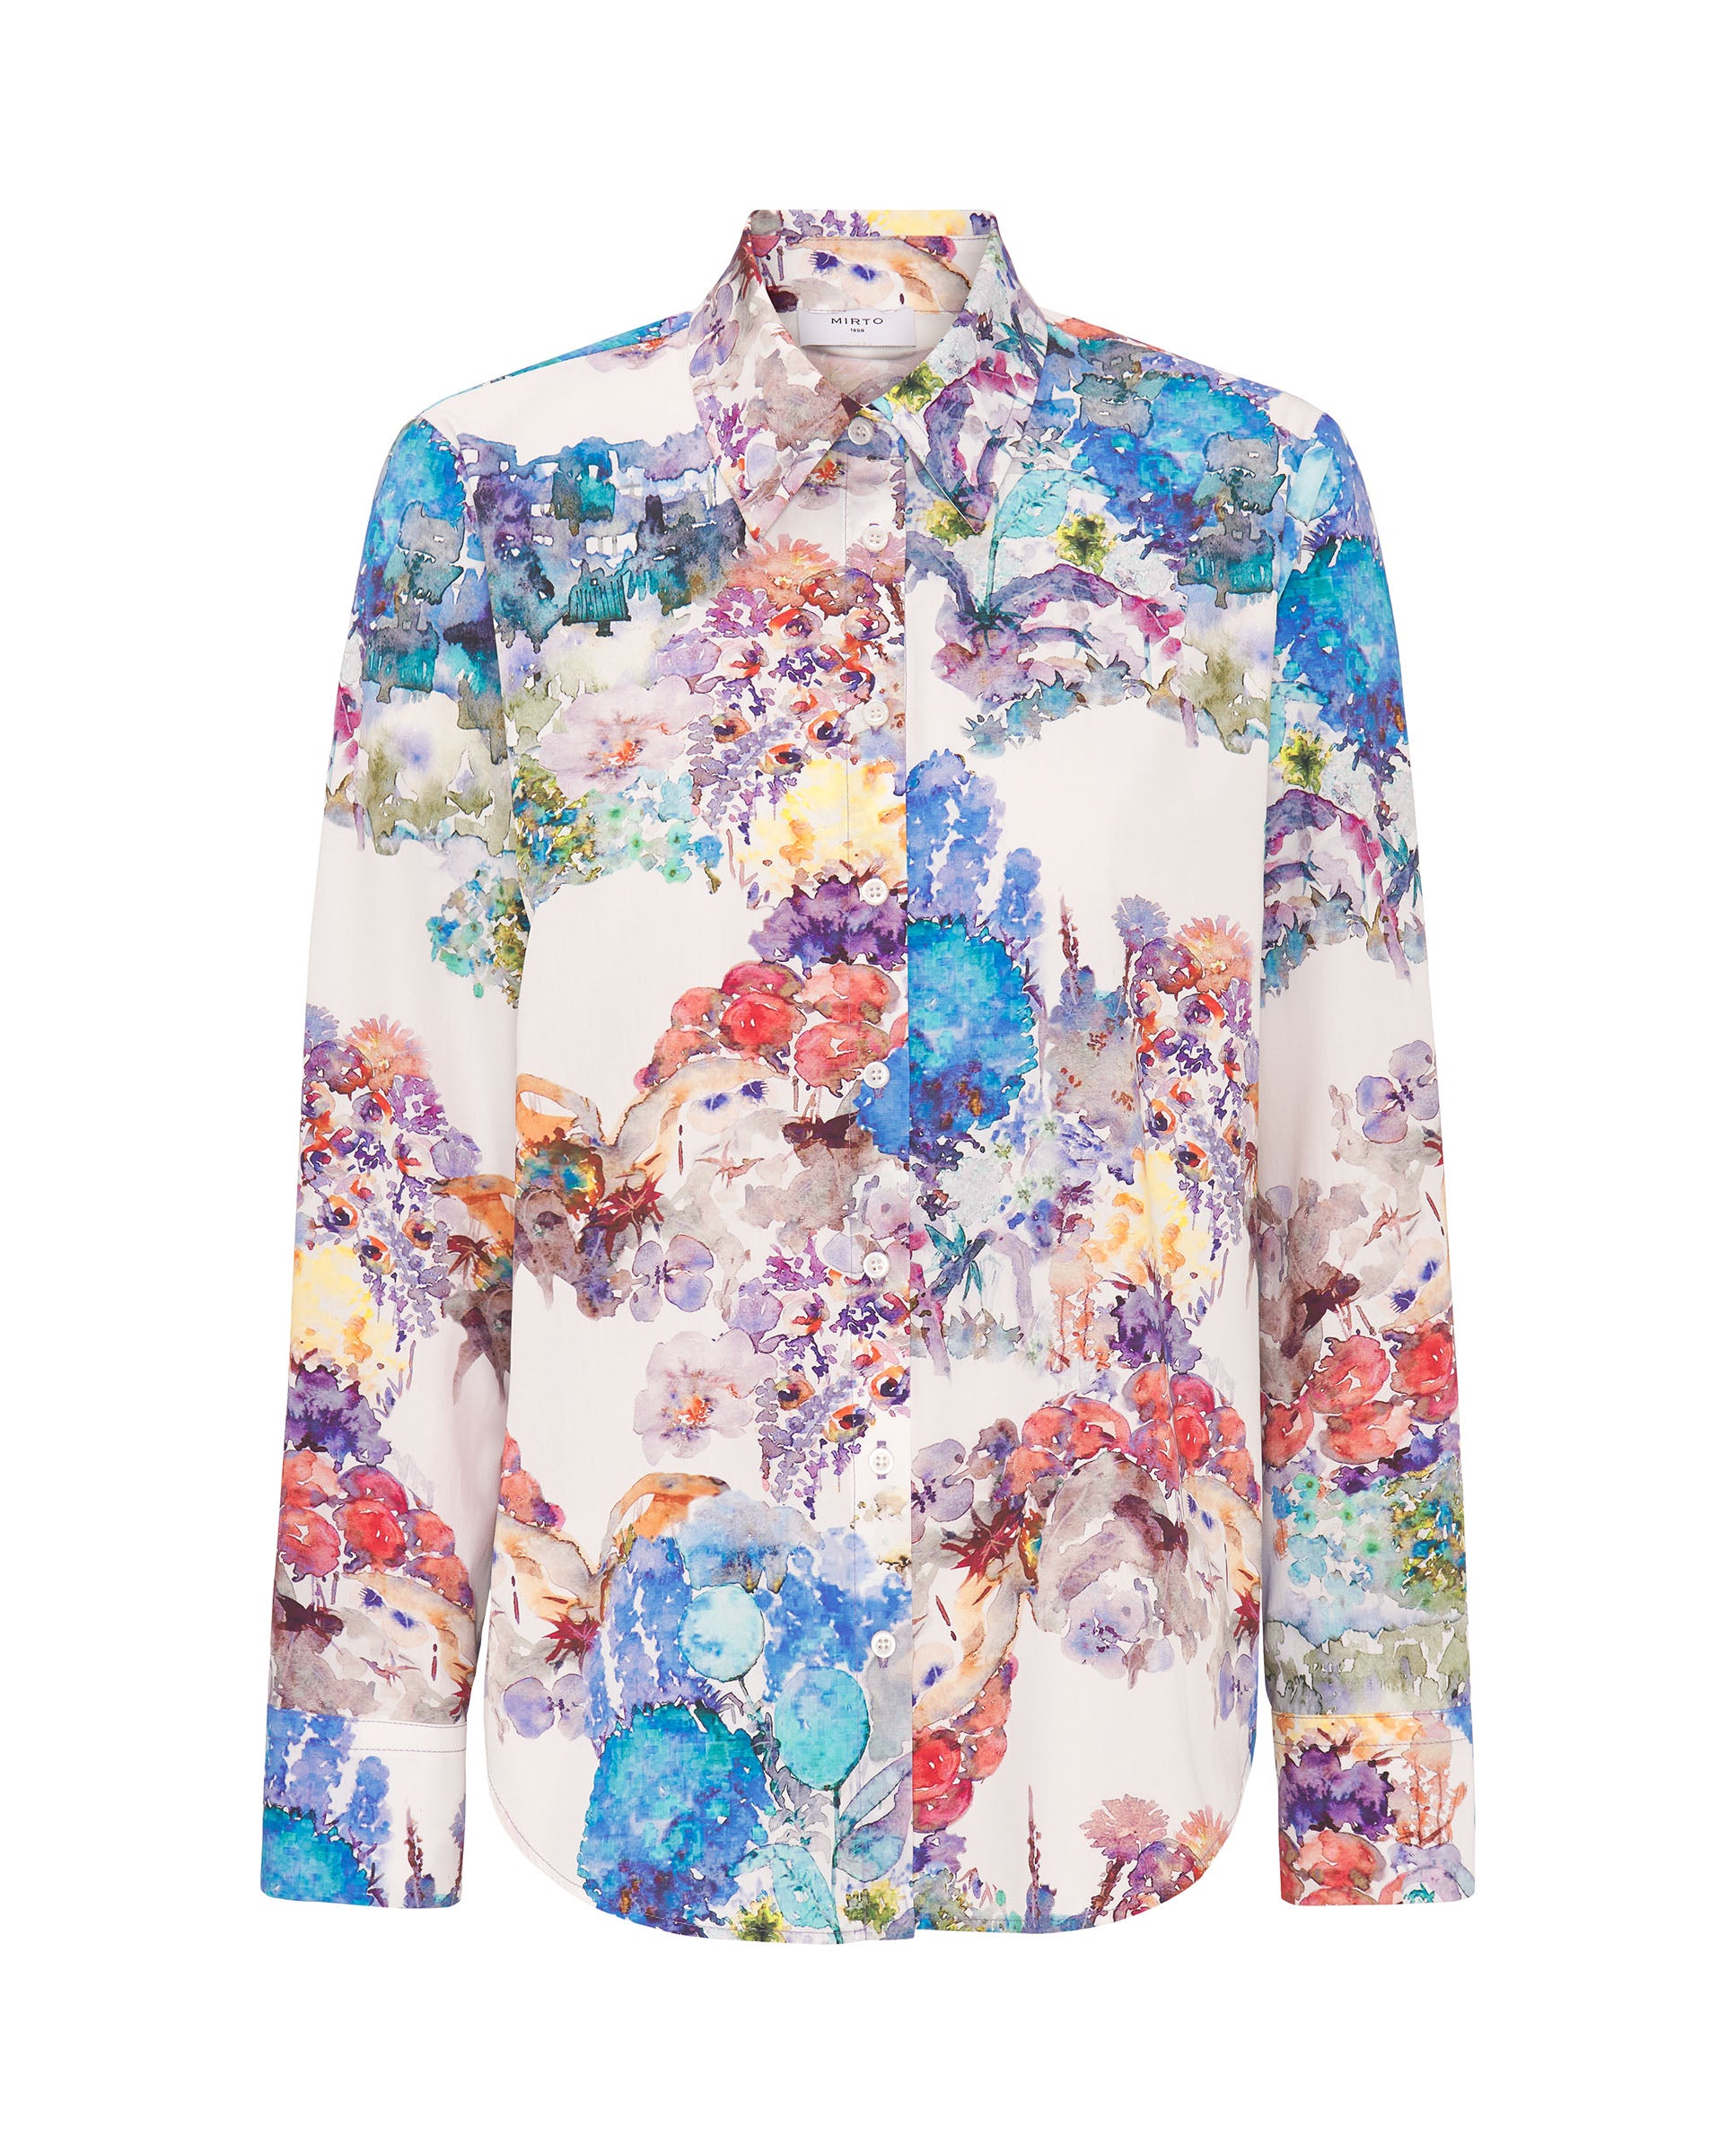 Multicolor cotton print shirt by MIRTO